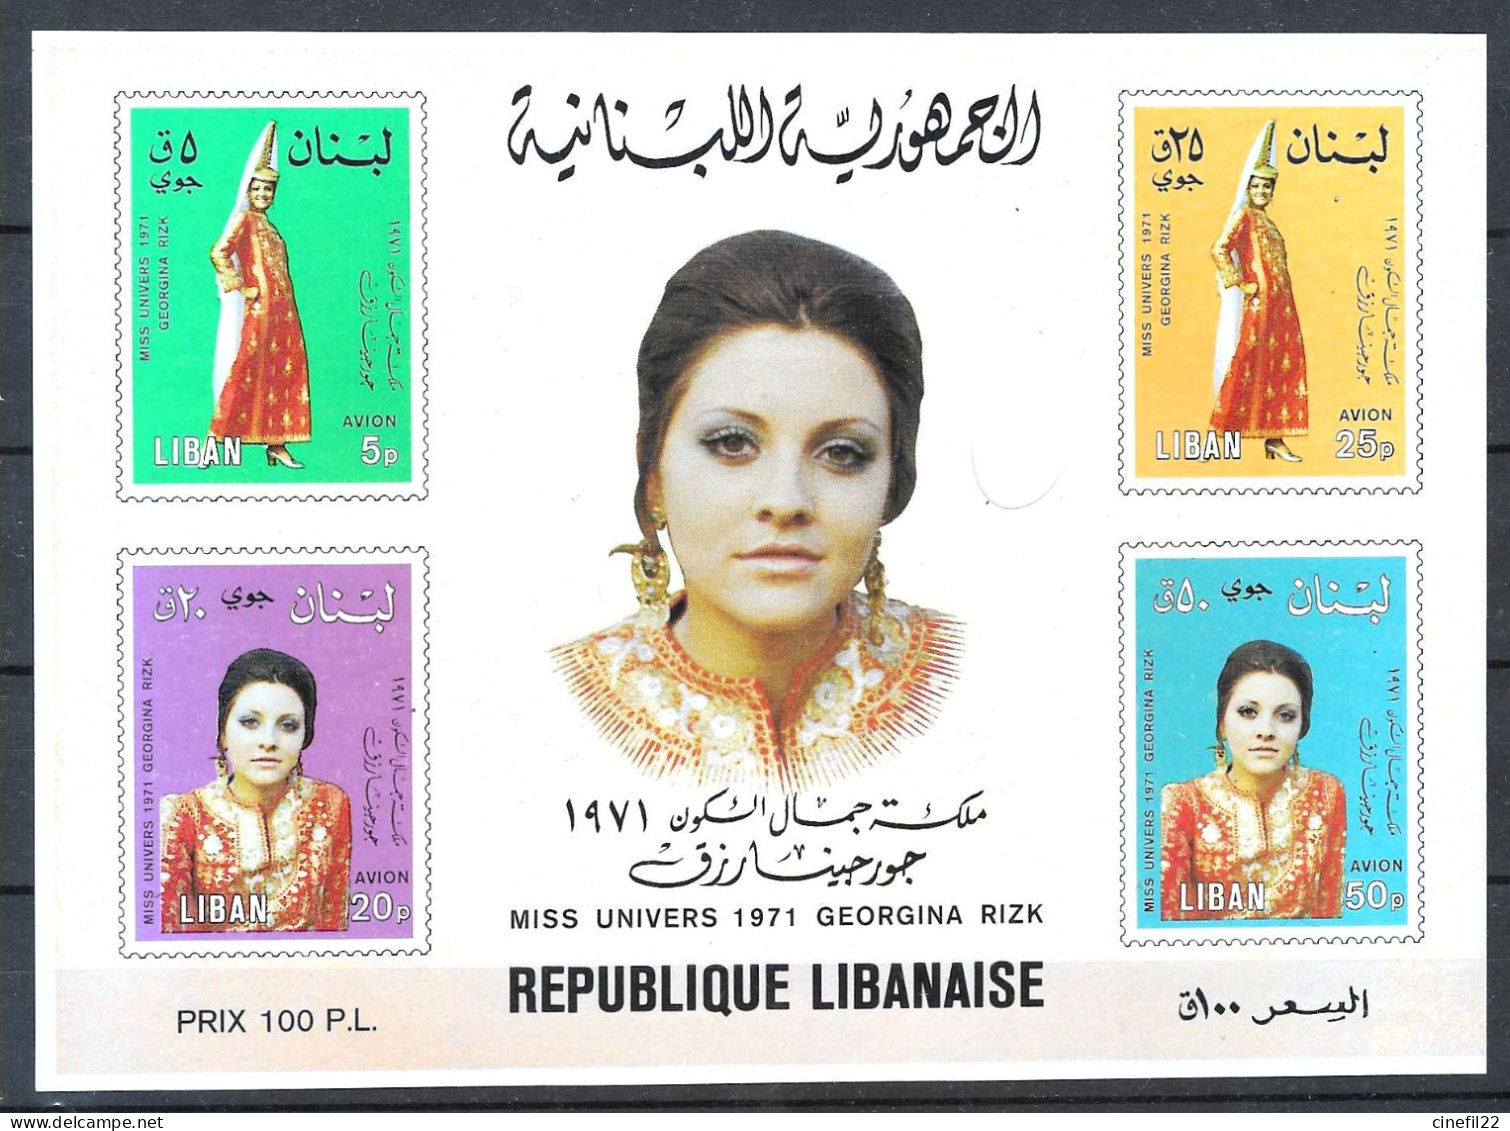 Liban - Lebanon, S/S Georgina Rizk Miss Univers, Mode, Mannequin, Cinema, 1974 - Libanon